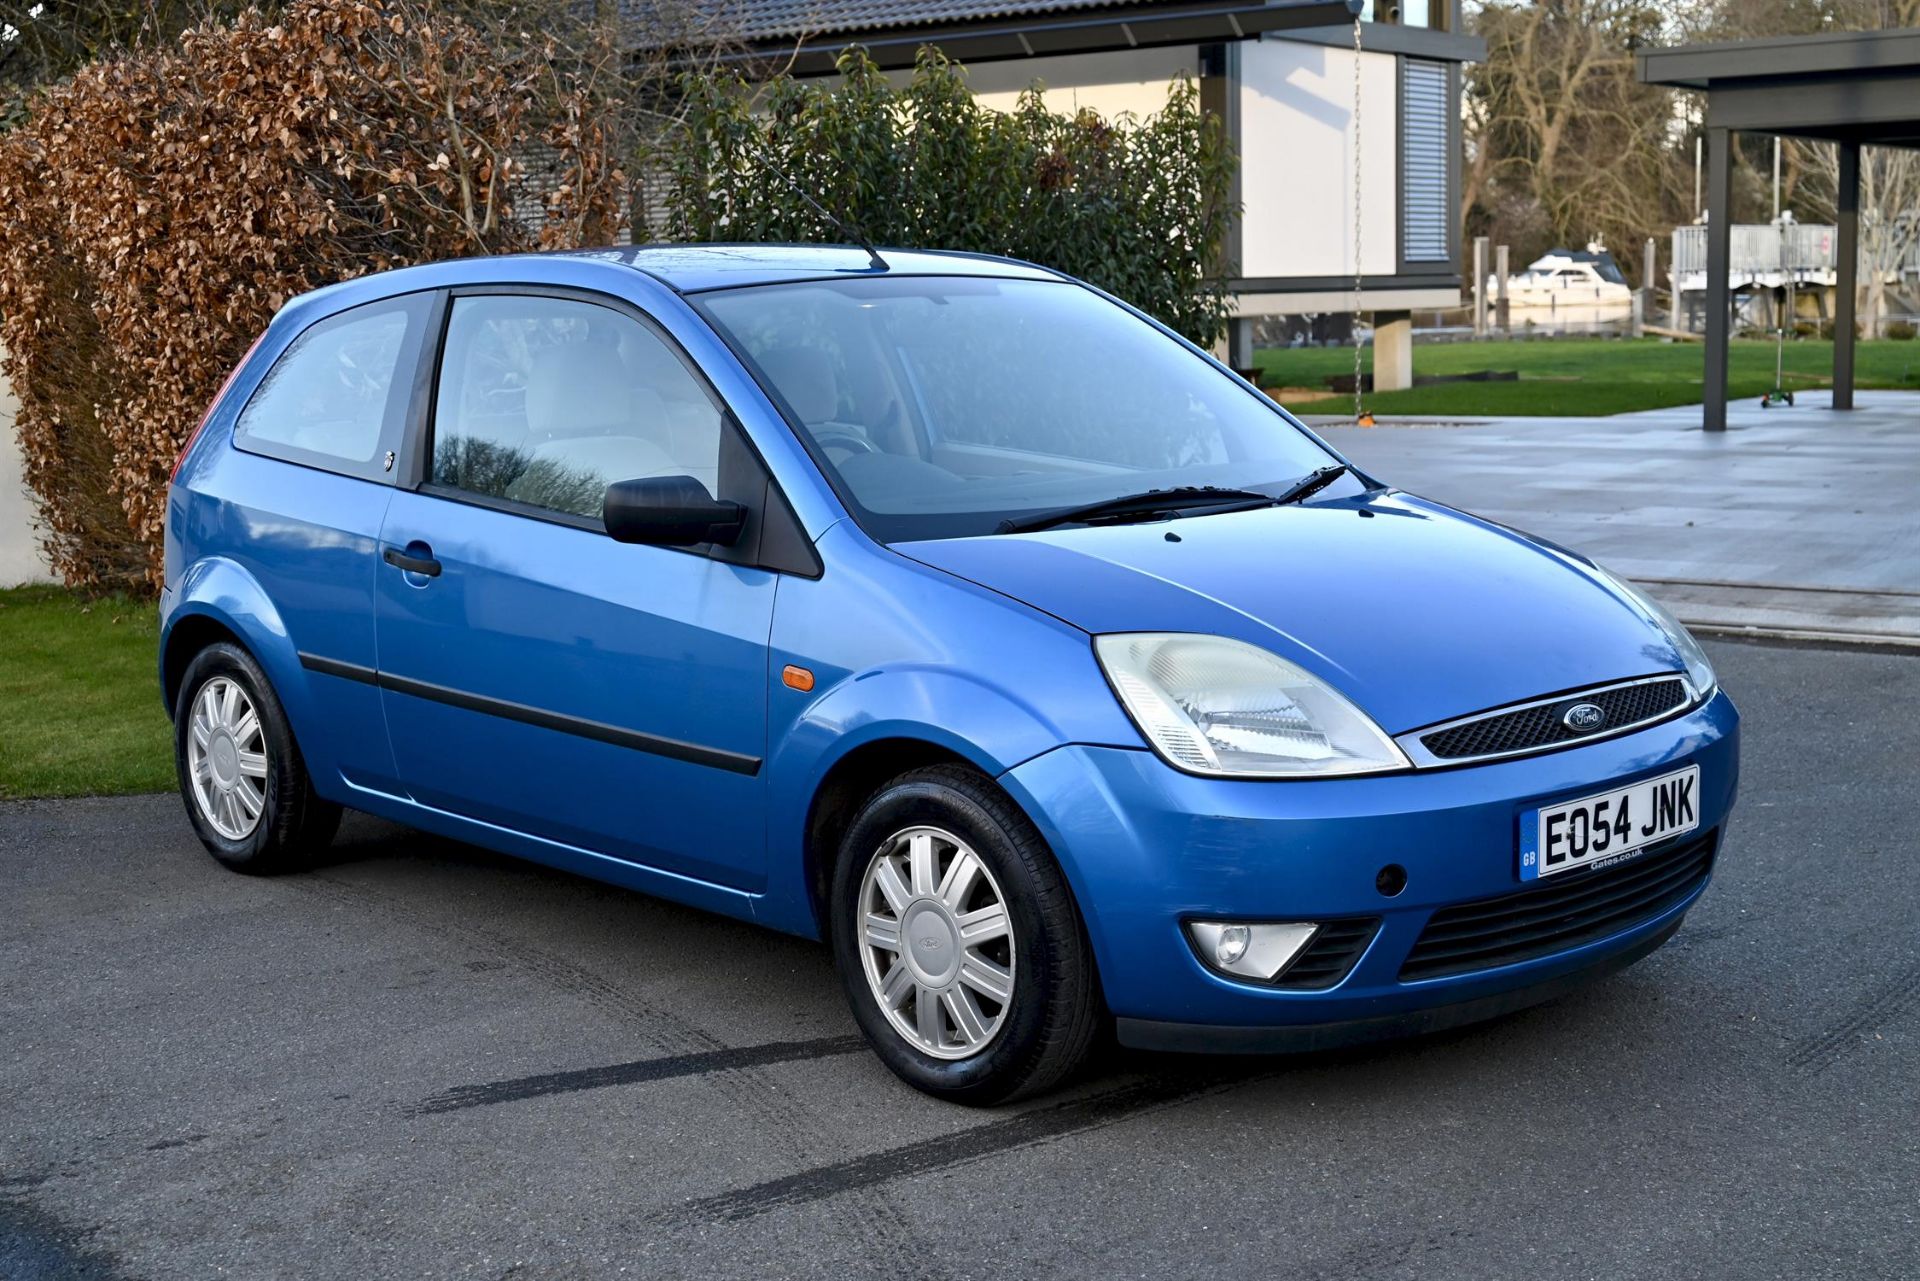 2004 Ford Fiesta 1.4 Ghia 3-door hatchback. Registration number: EO54 JNK. Metallic Aquarius Blue,